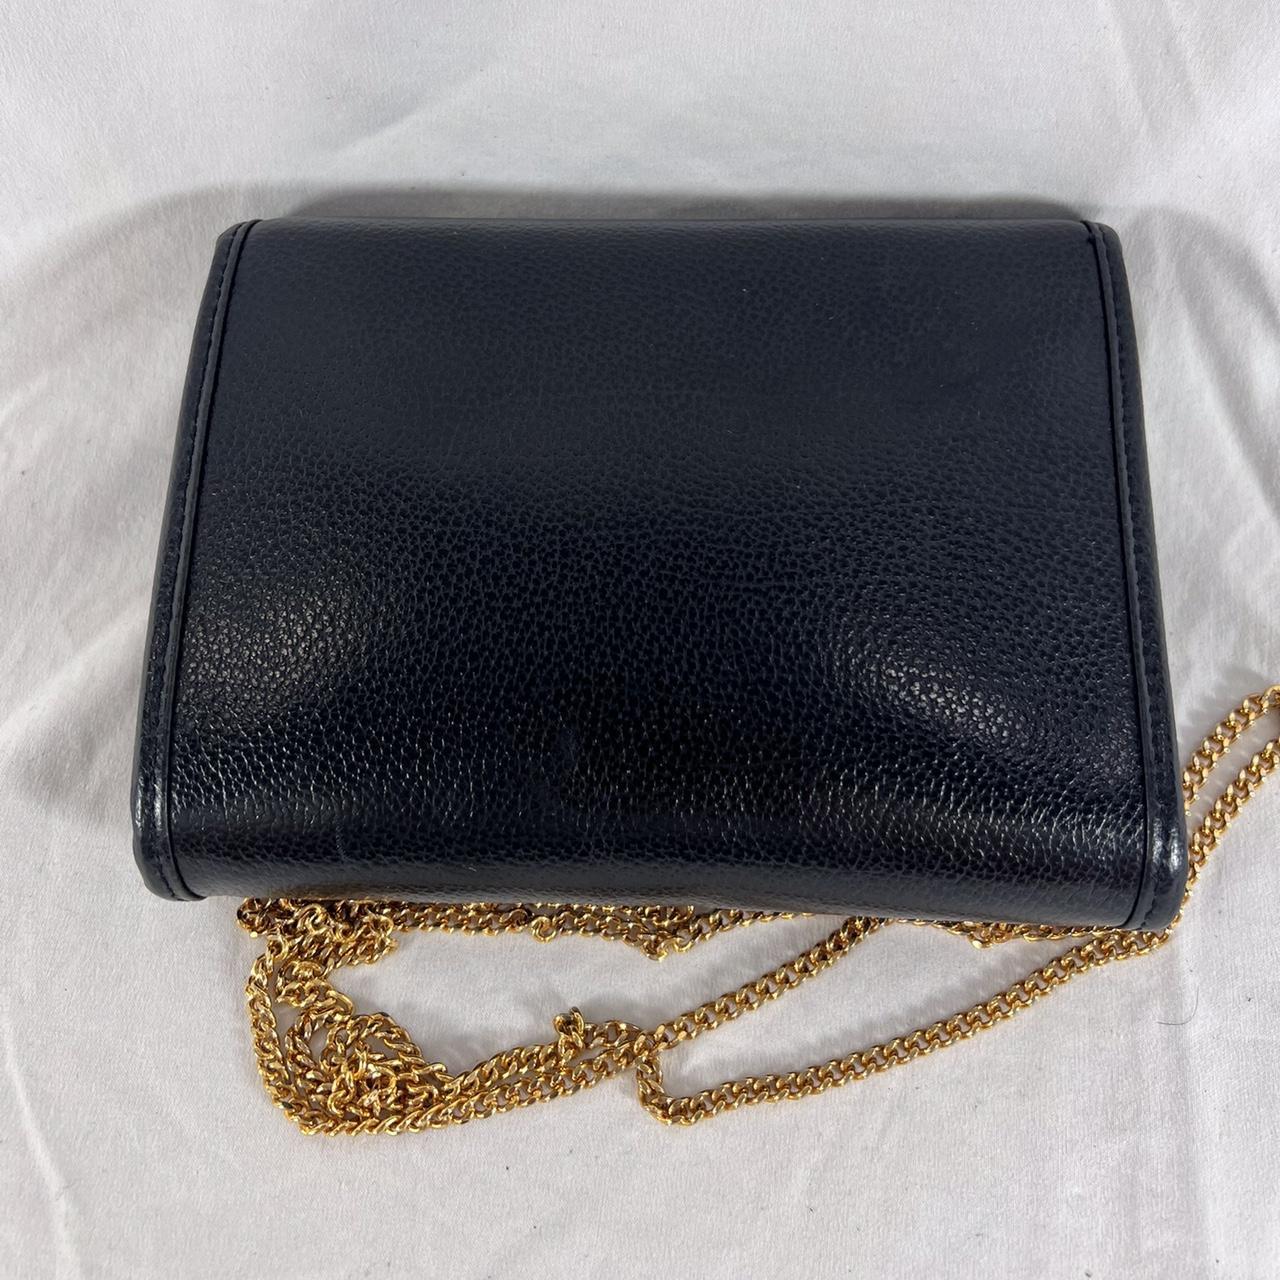 Nina Ricci Women's Black and Gold Bag (7)